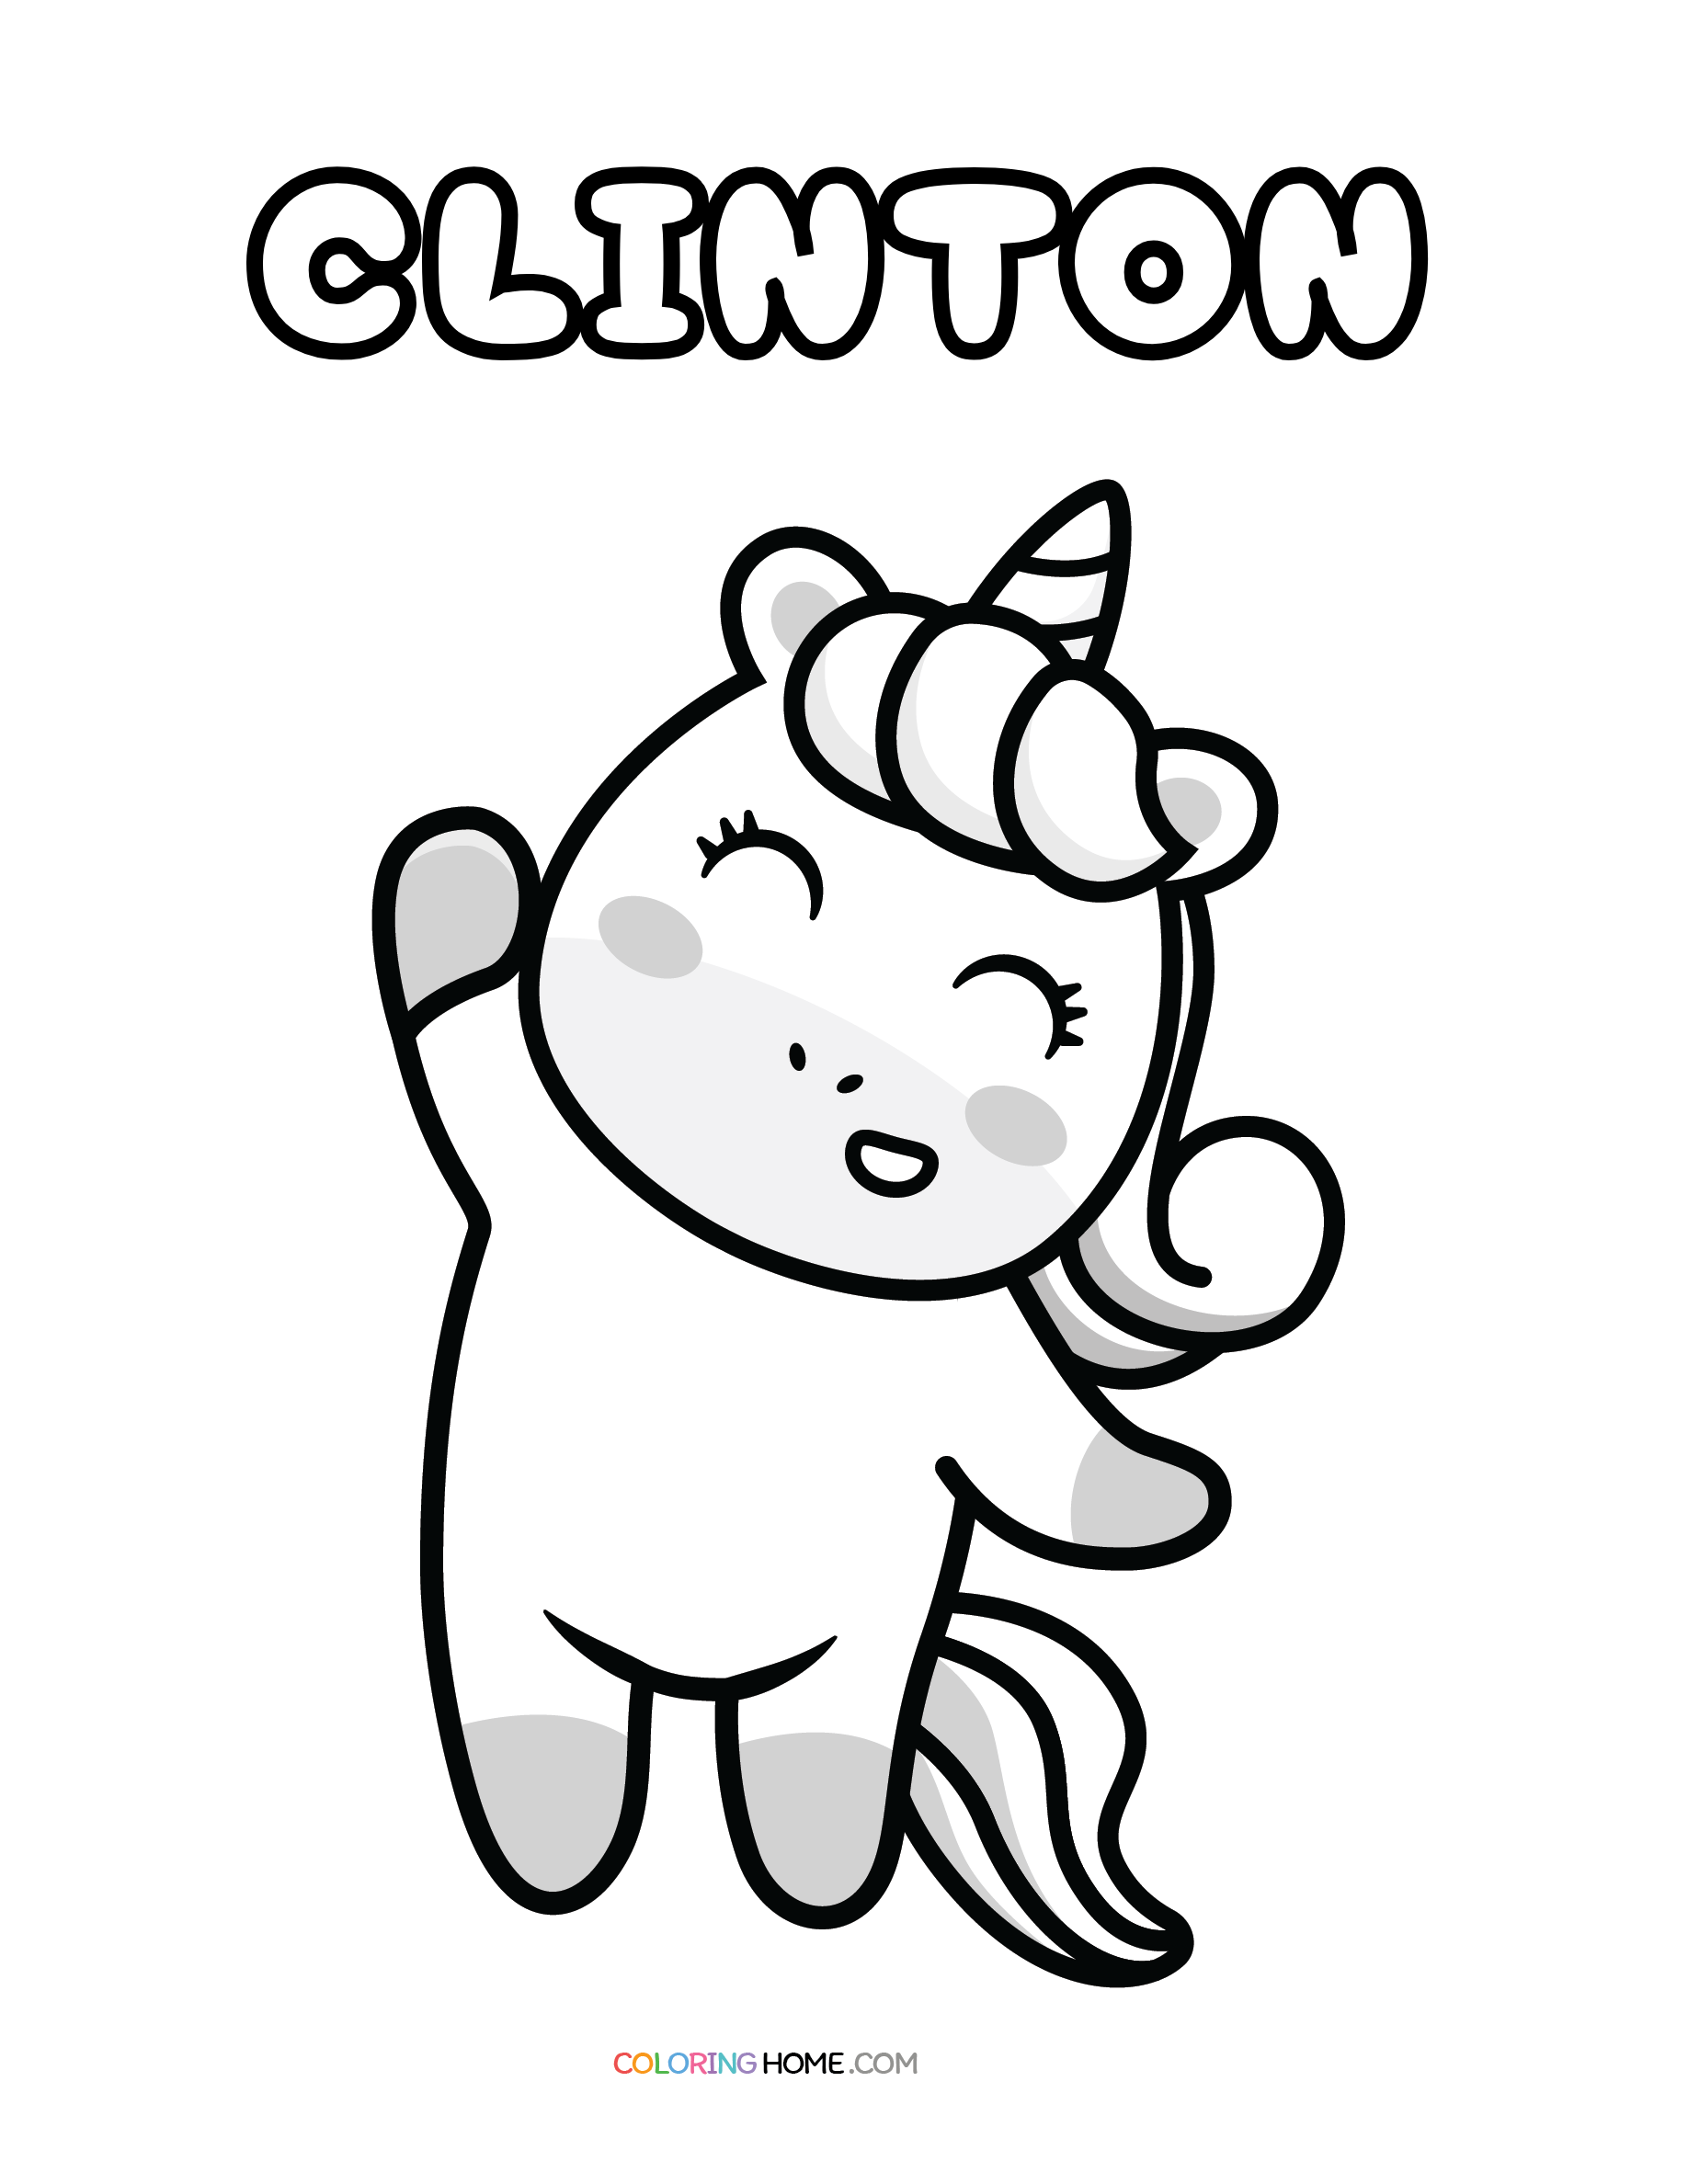 Clinton unicorn coloring page